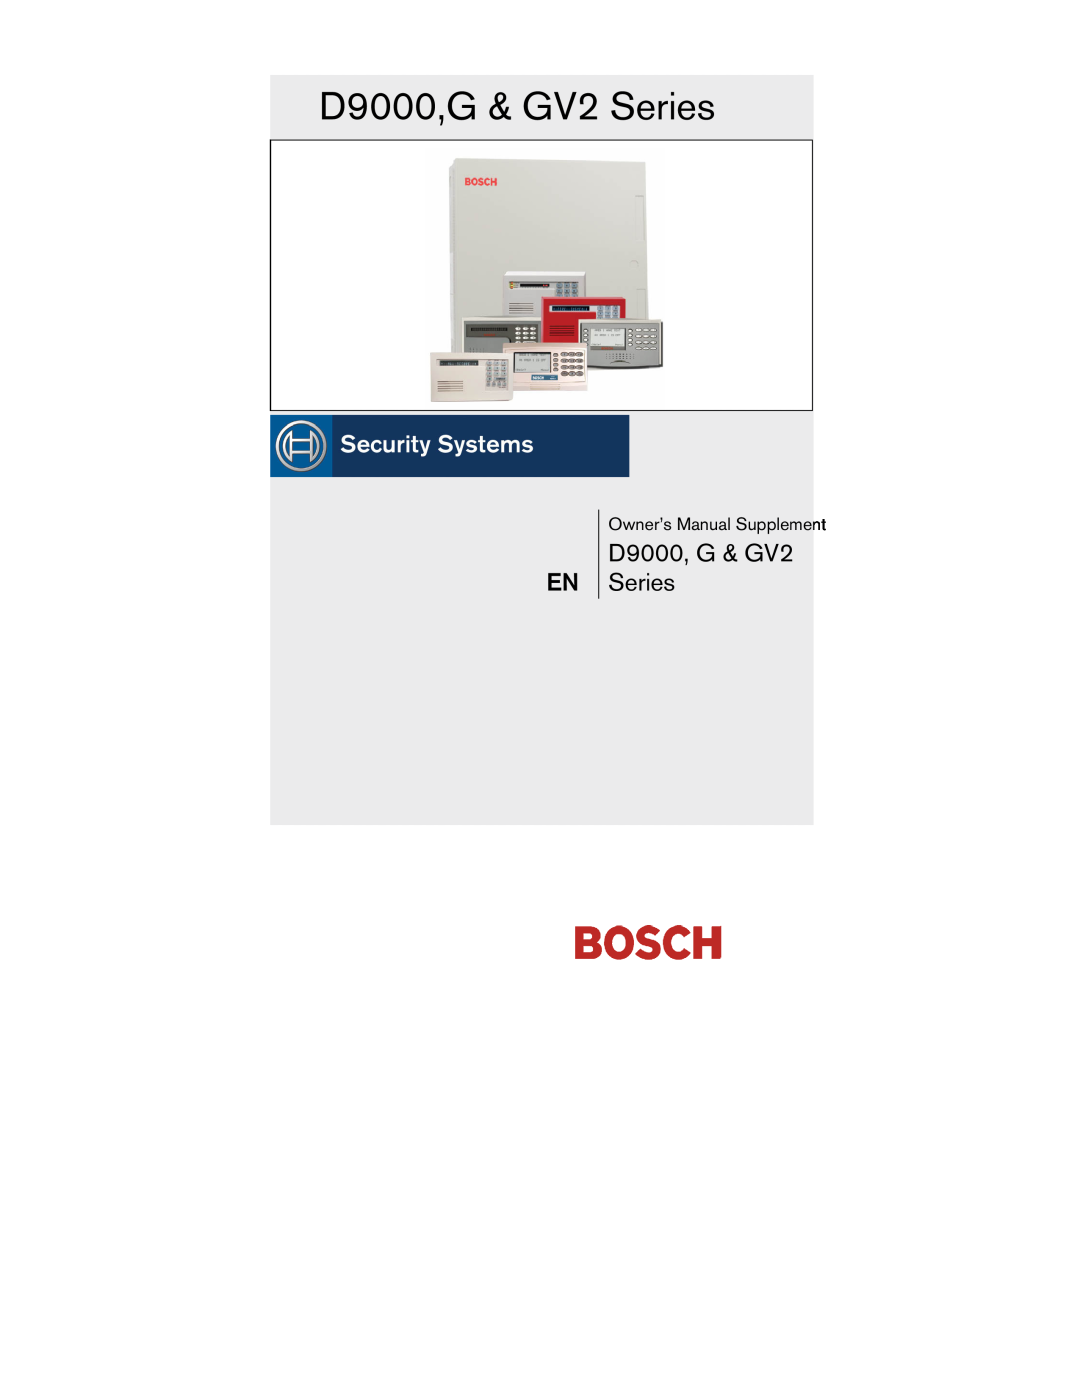 Bosch Appliances owner manual D9000, G & GV2 Series, D9000,G & GV2 Series 